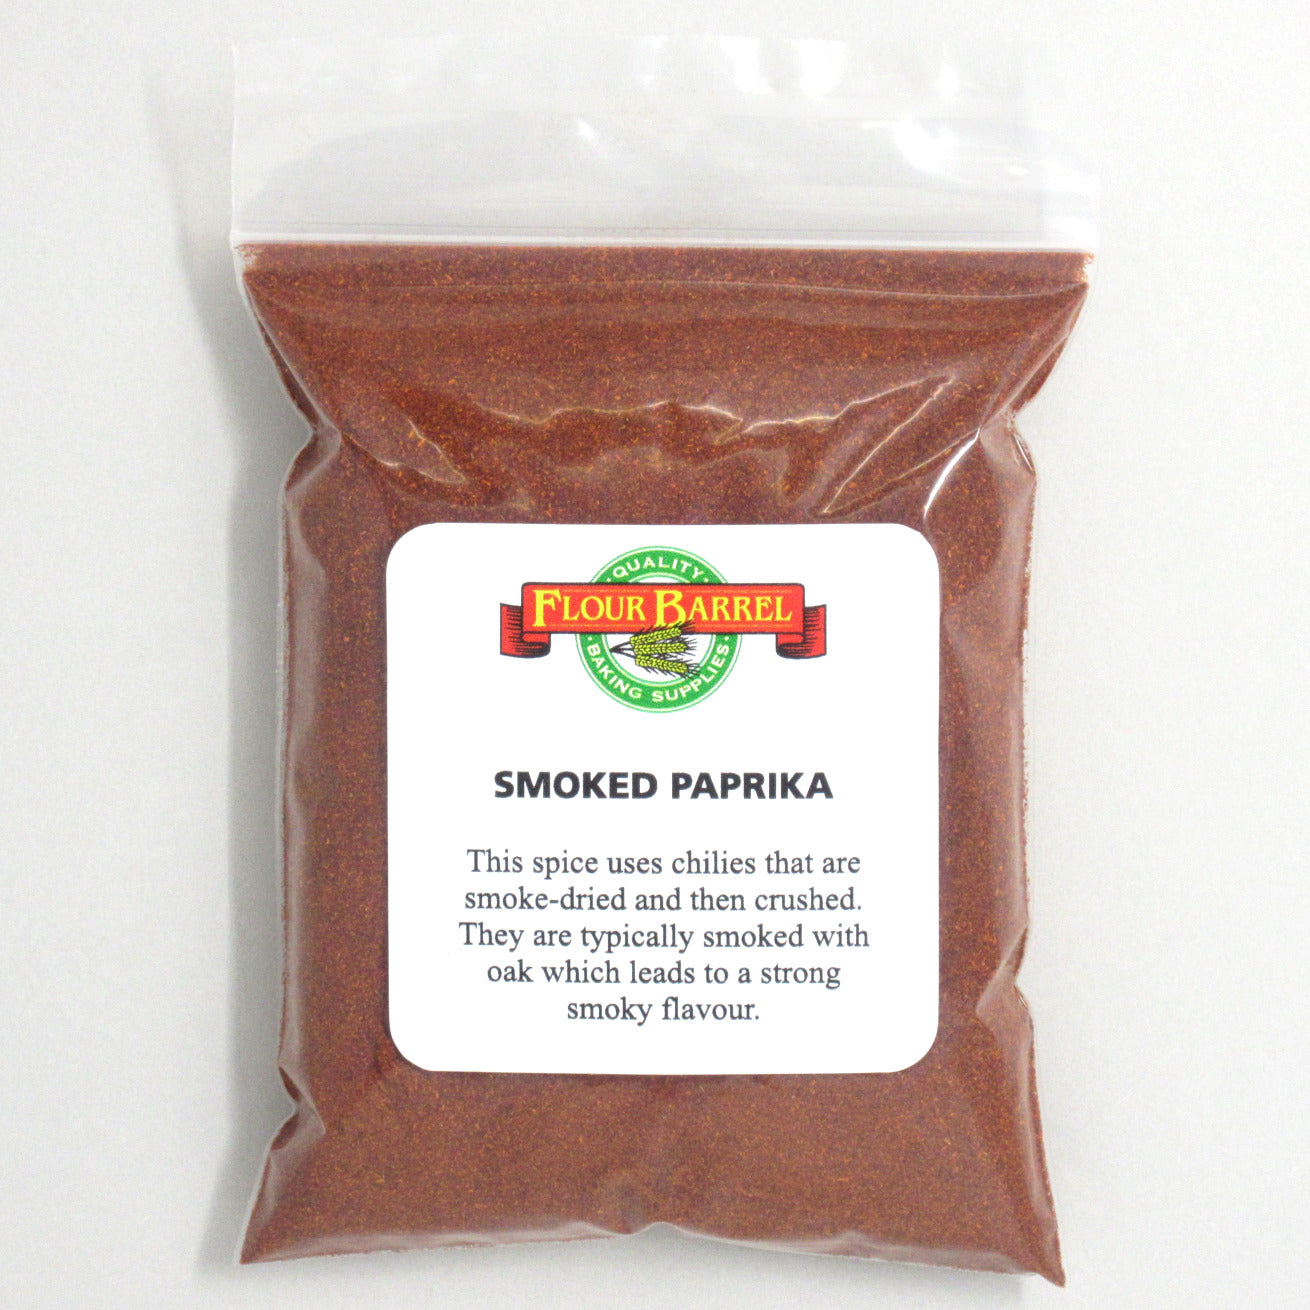 Flour Barrel product image - Smoked Paprika